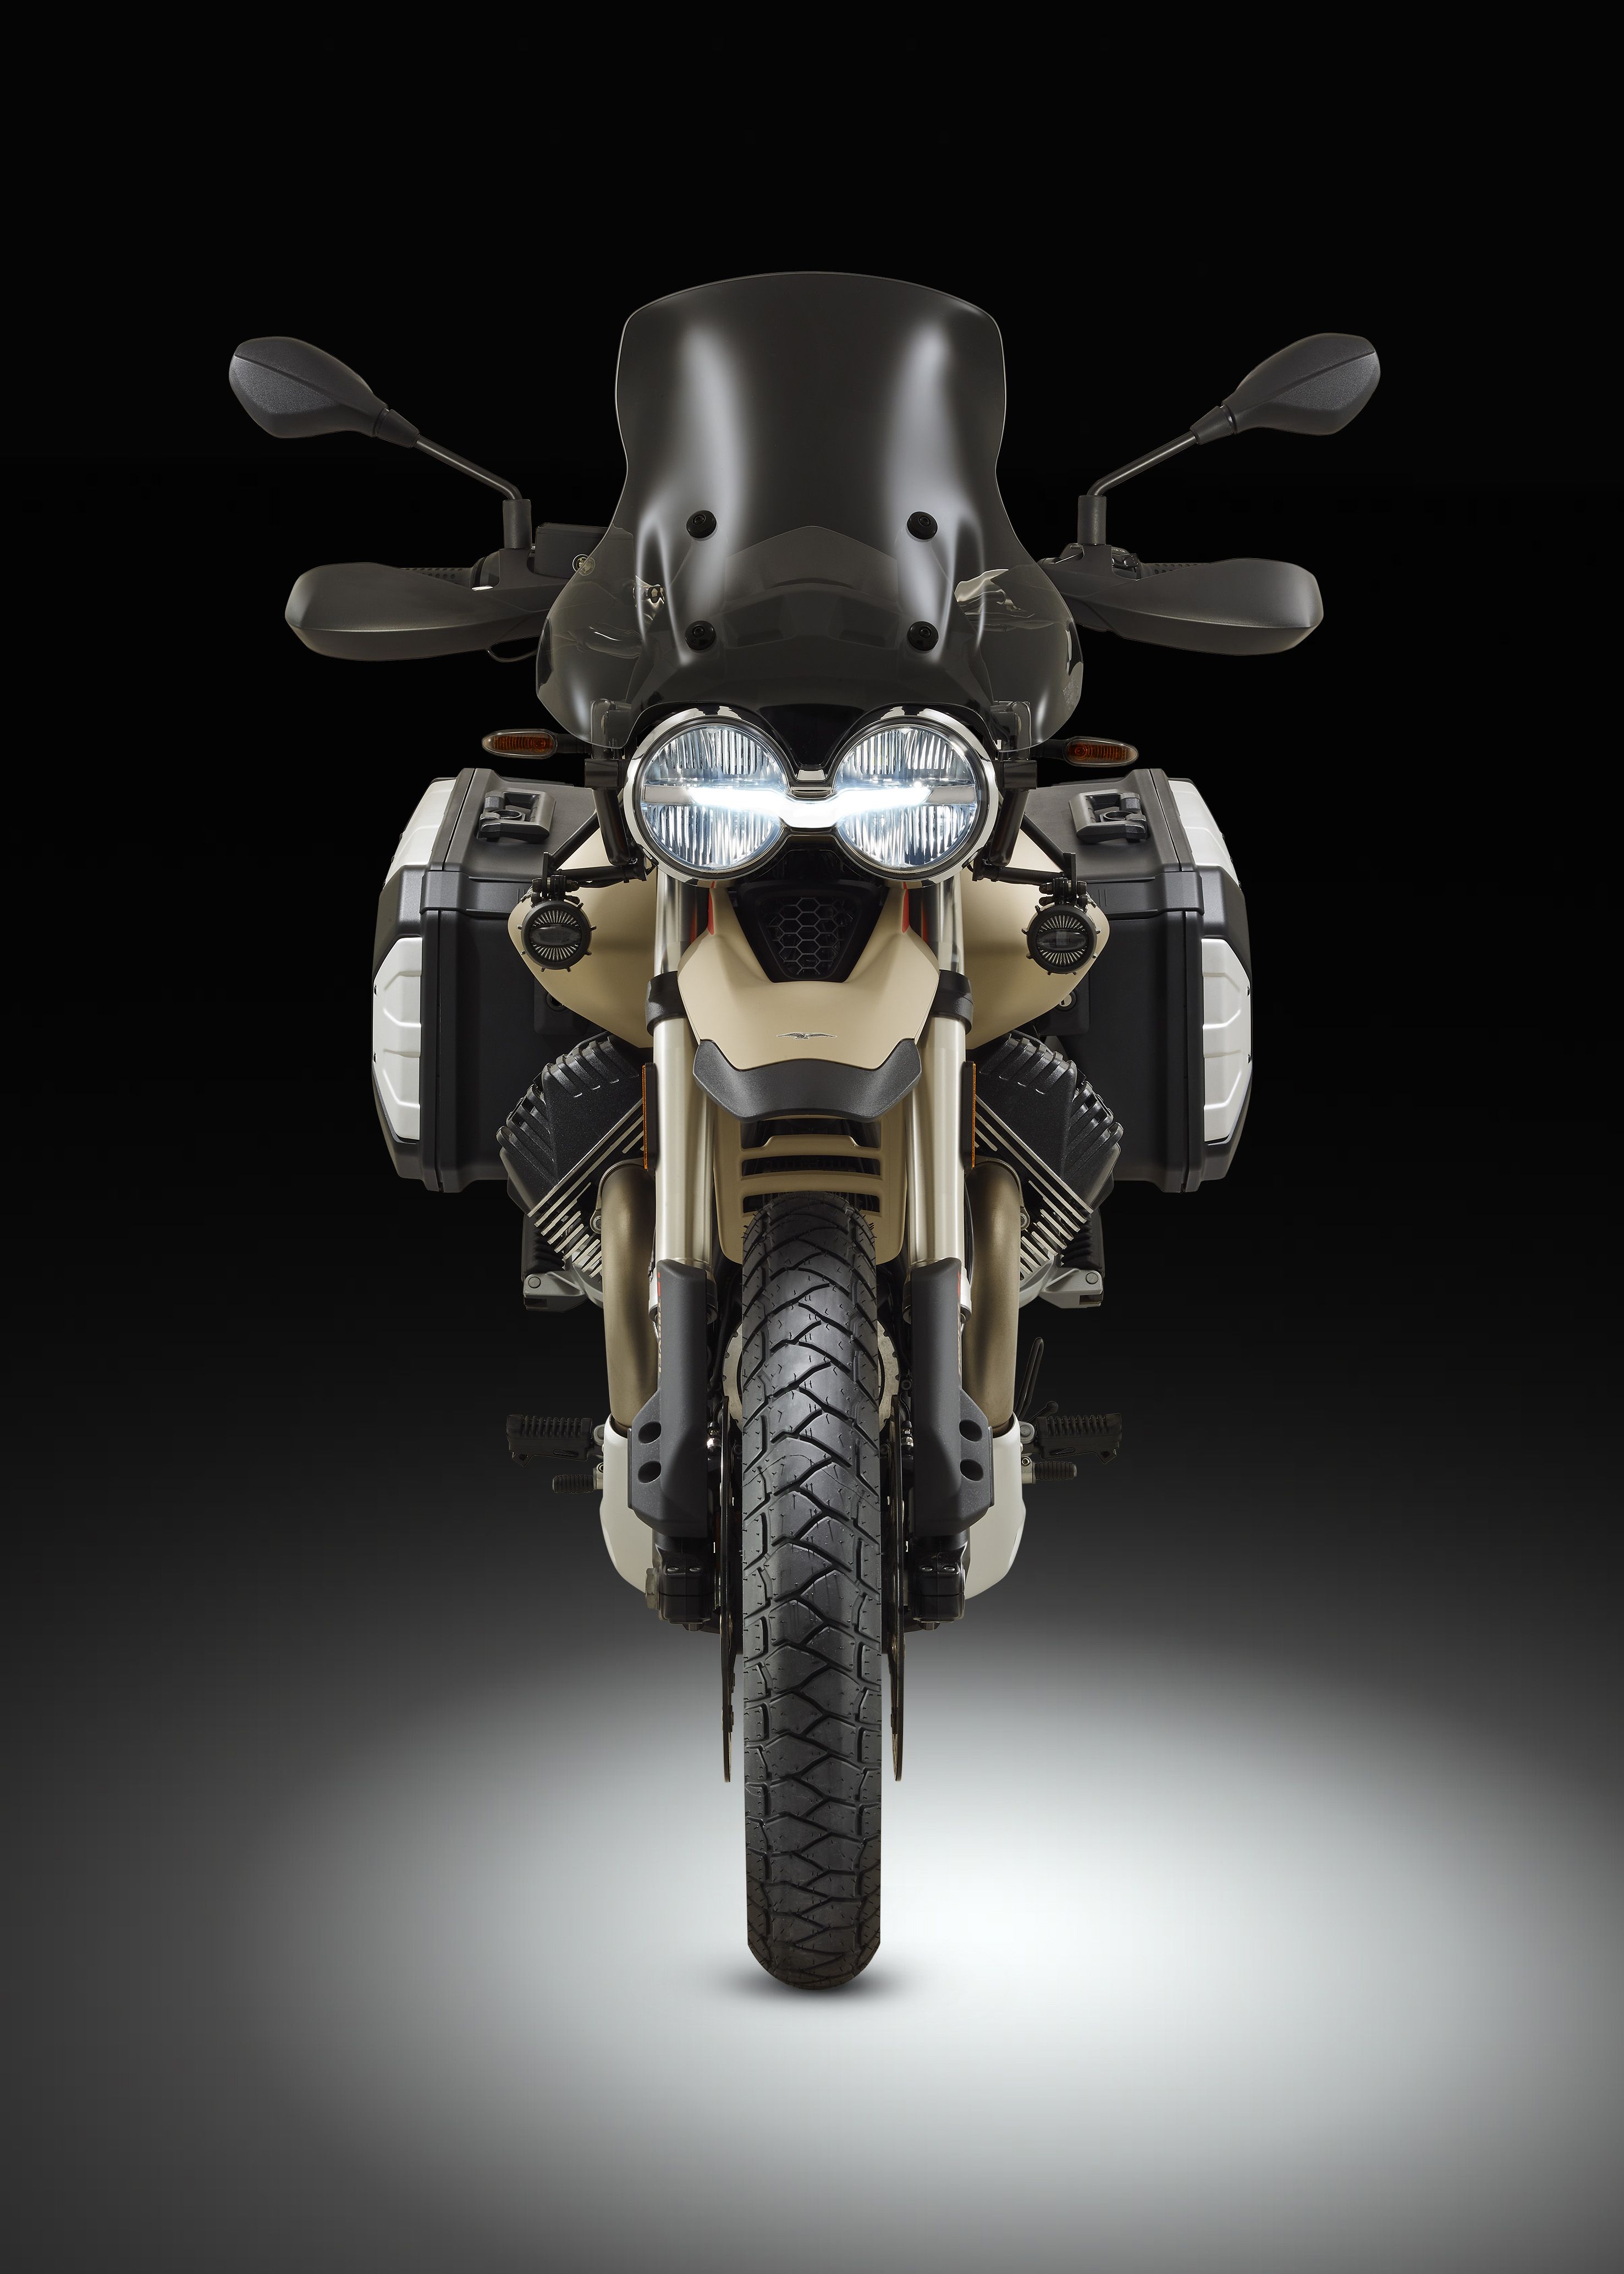 2020 Moto Guzzi V85 TT Travel